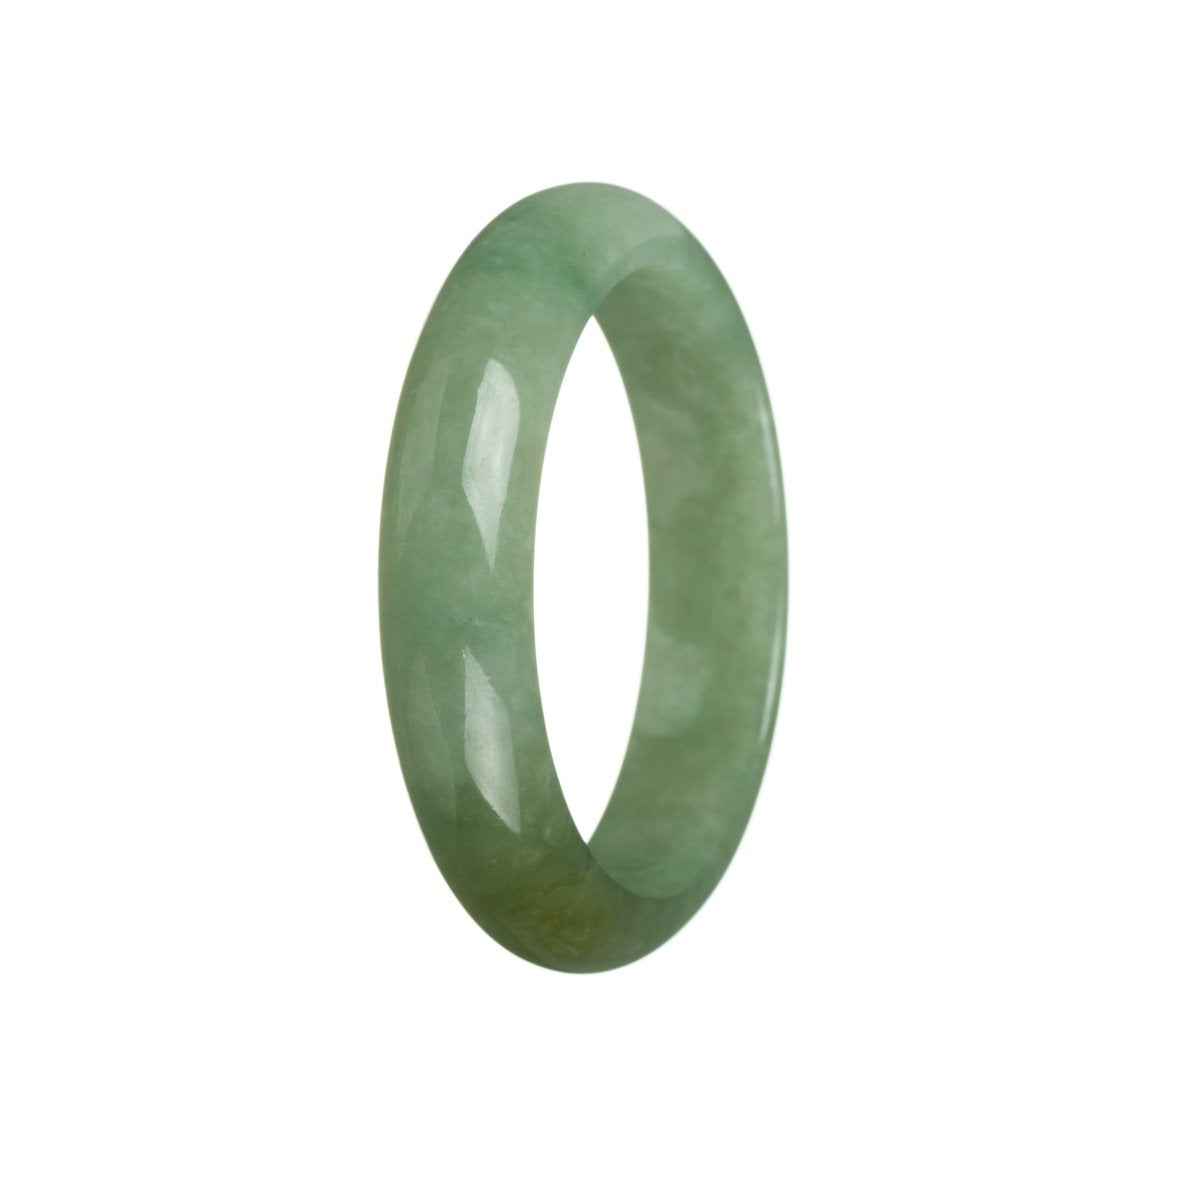 A half-moon shaped green jade bracelet, made of Grade A certified jadeite jade, offered by MAYS GEMS.